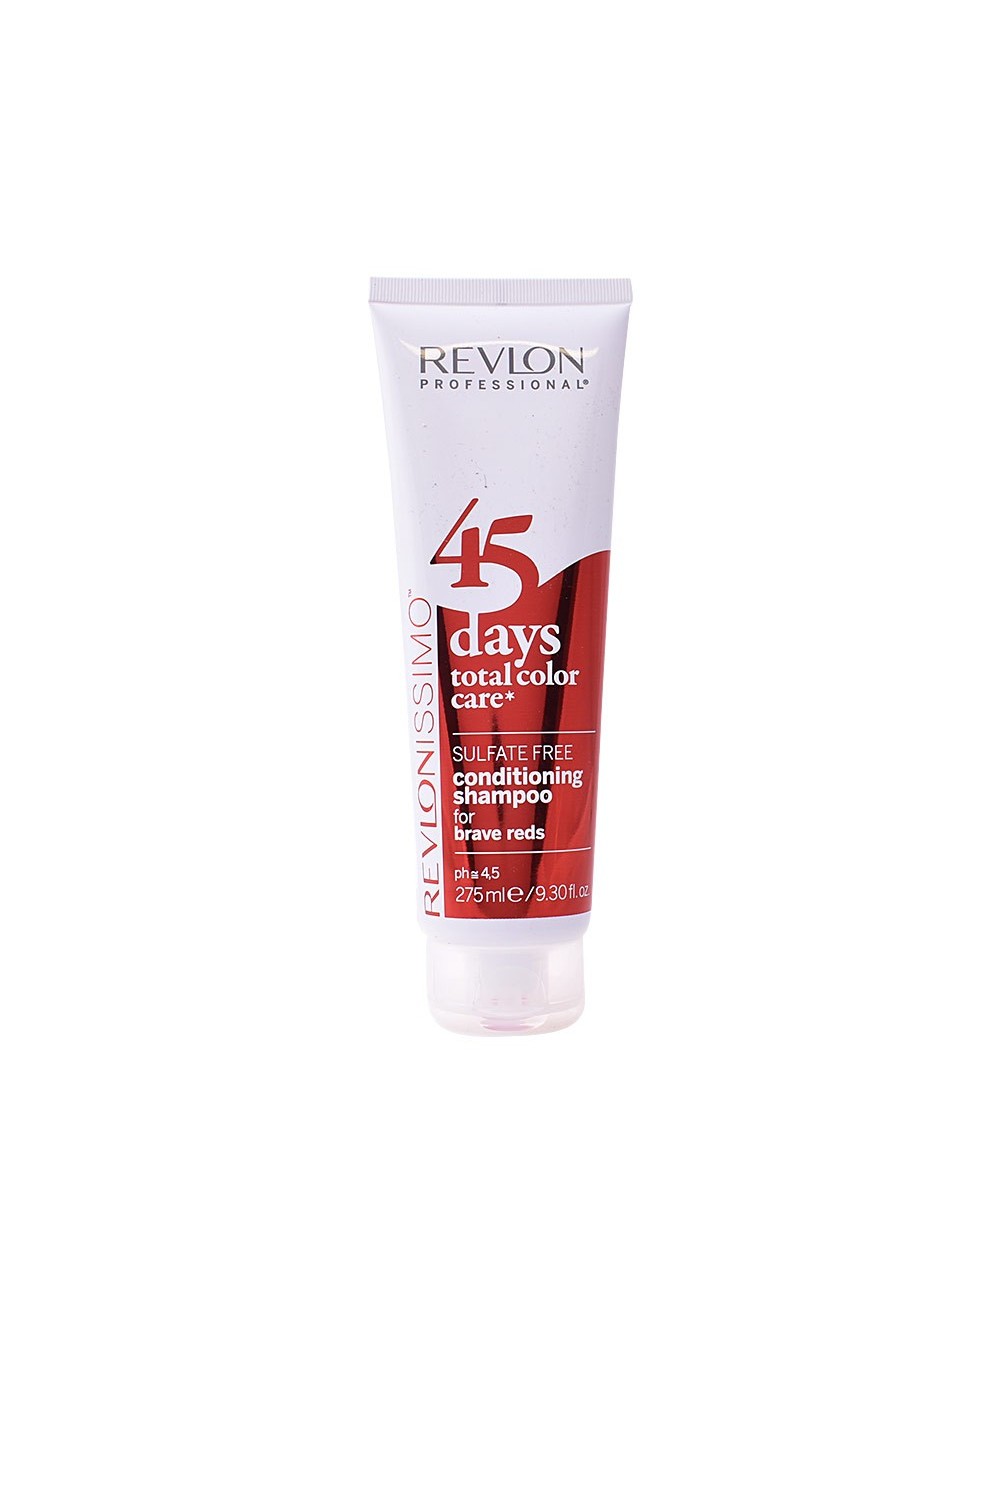 Revlon Revlonissimo 45 Days Conditioning Shampoo Brave Reds 275ml